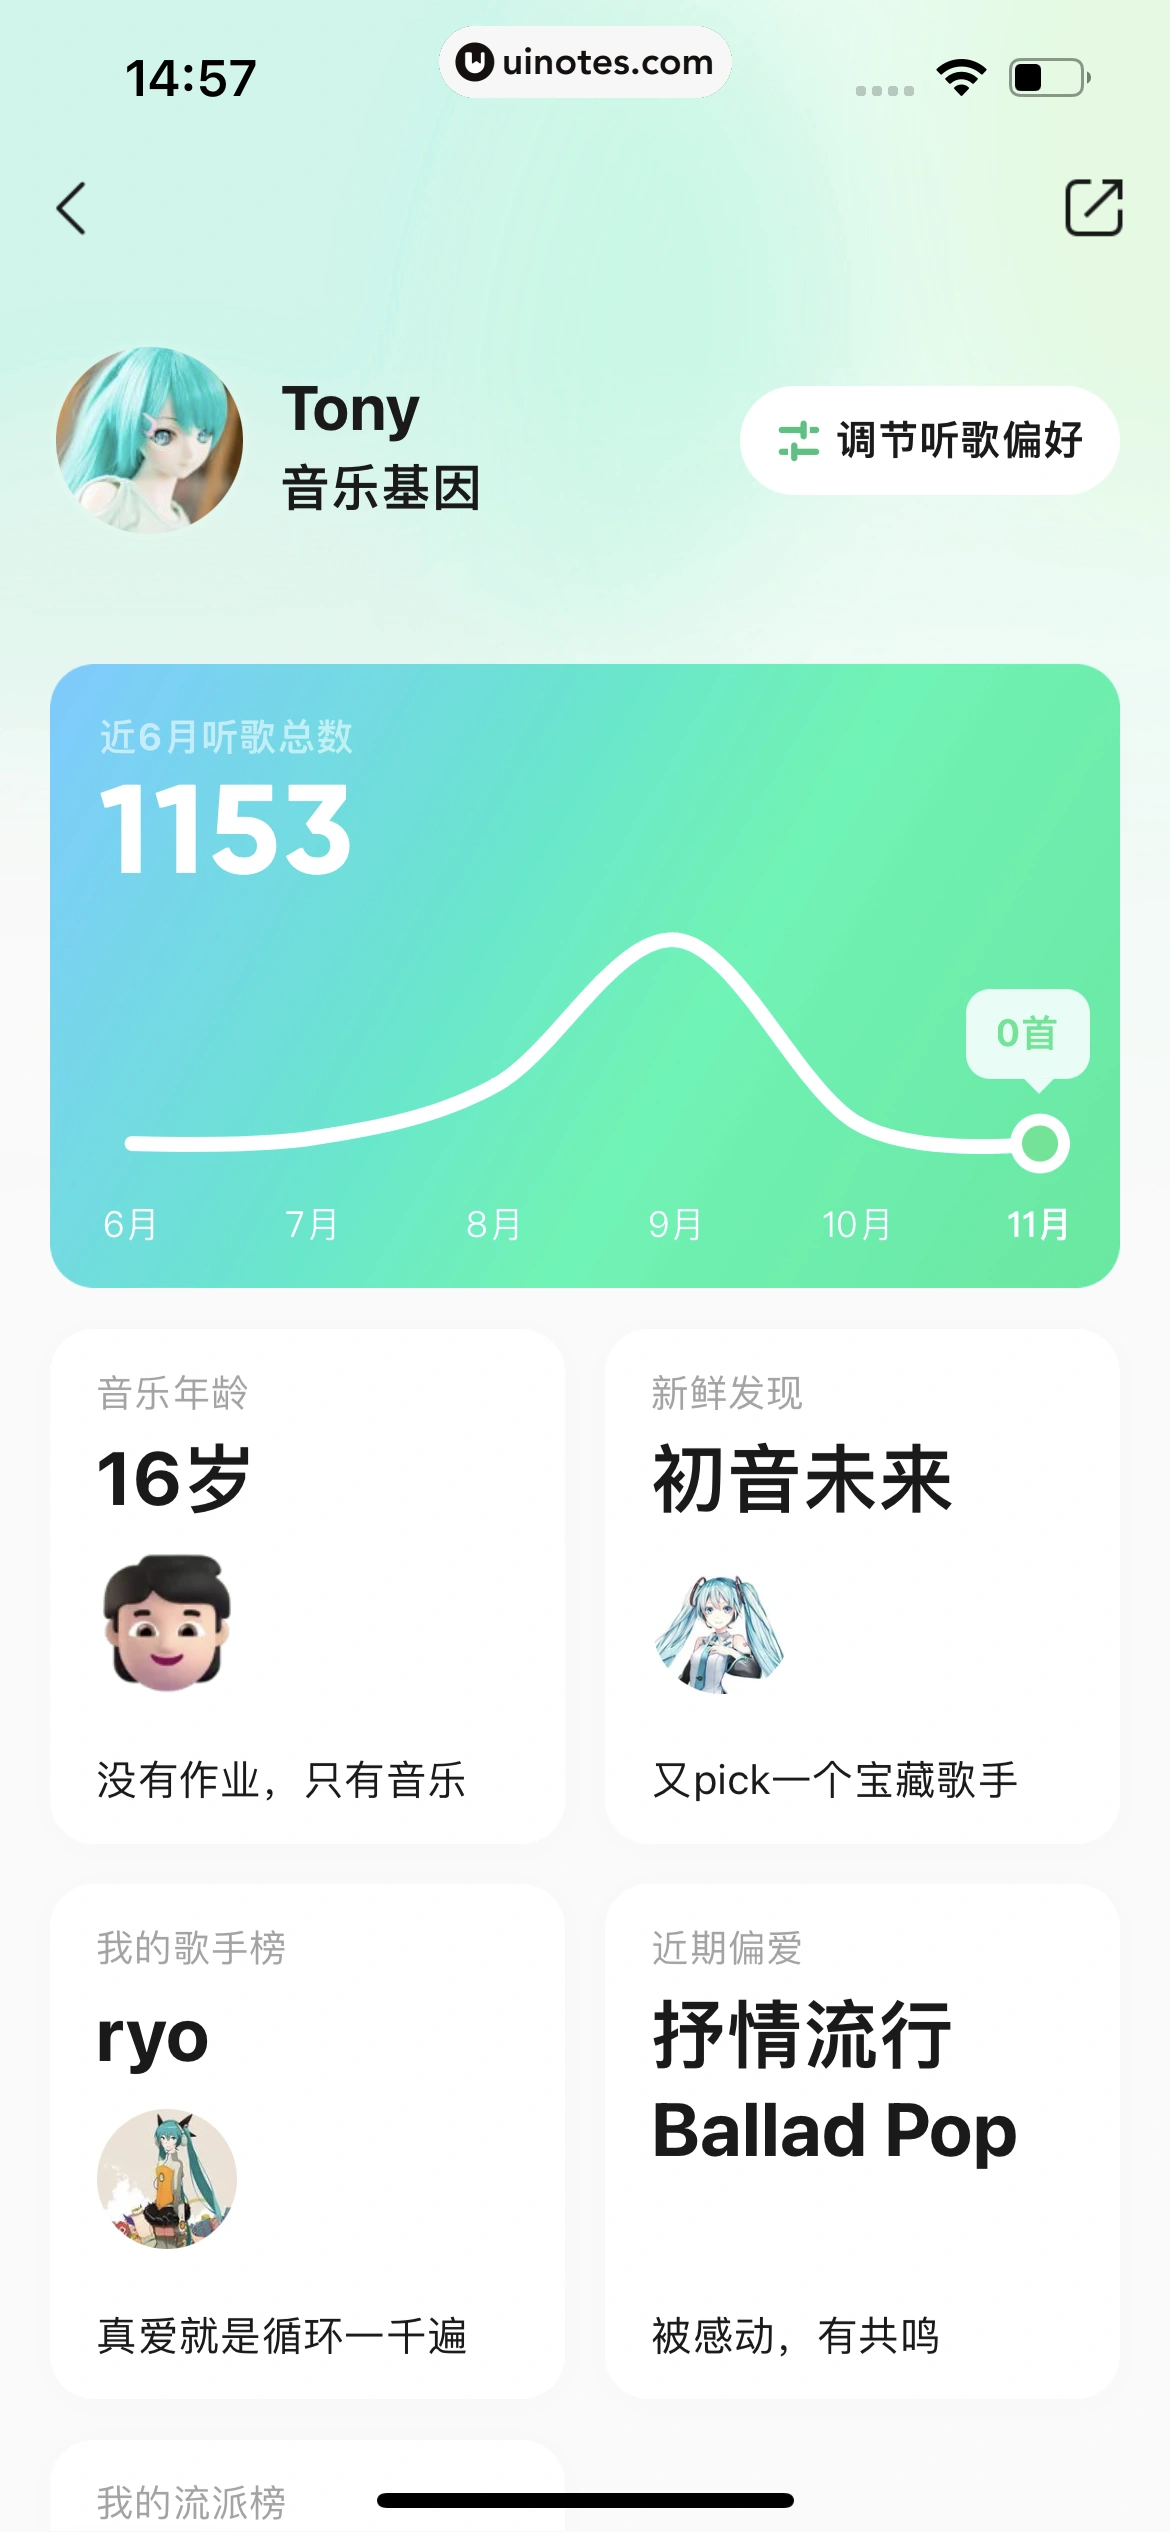 QQ音乐 App 截图 244 - UI Notes